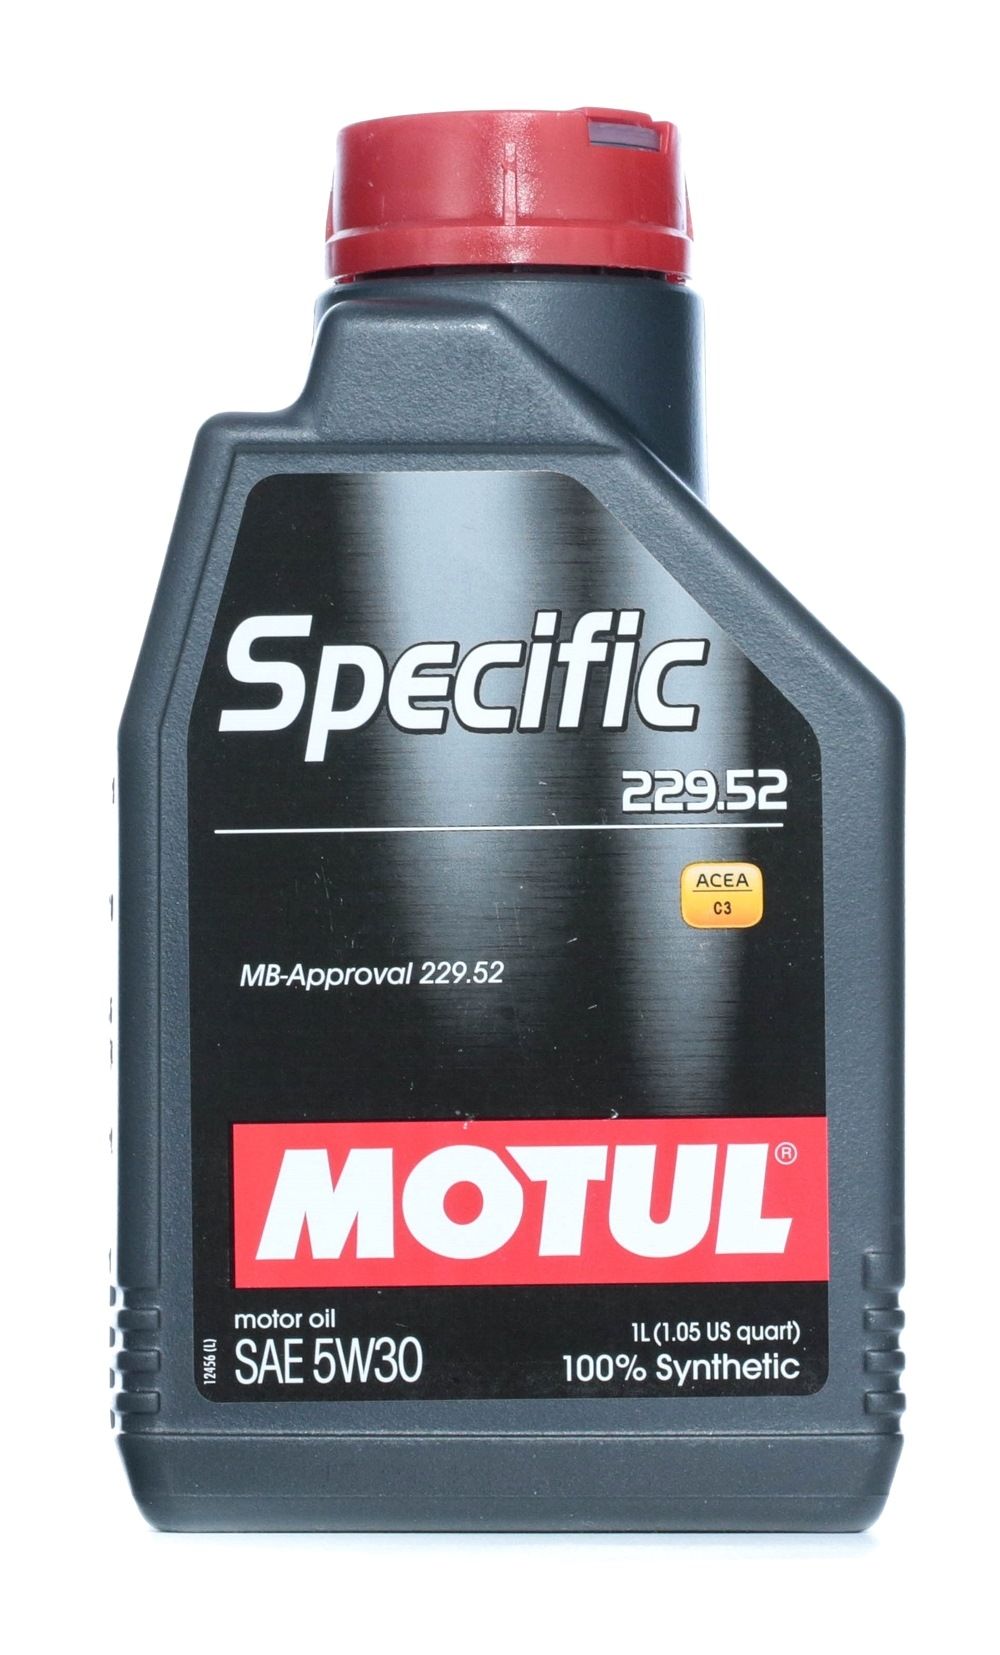 MOTUL Motoröl MERCEDES-BENZ,OPEL,FIAT 104844 Motorenöl,Öl,Öl für Motor von MOTUL